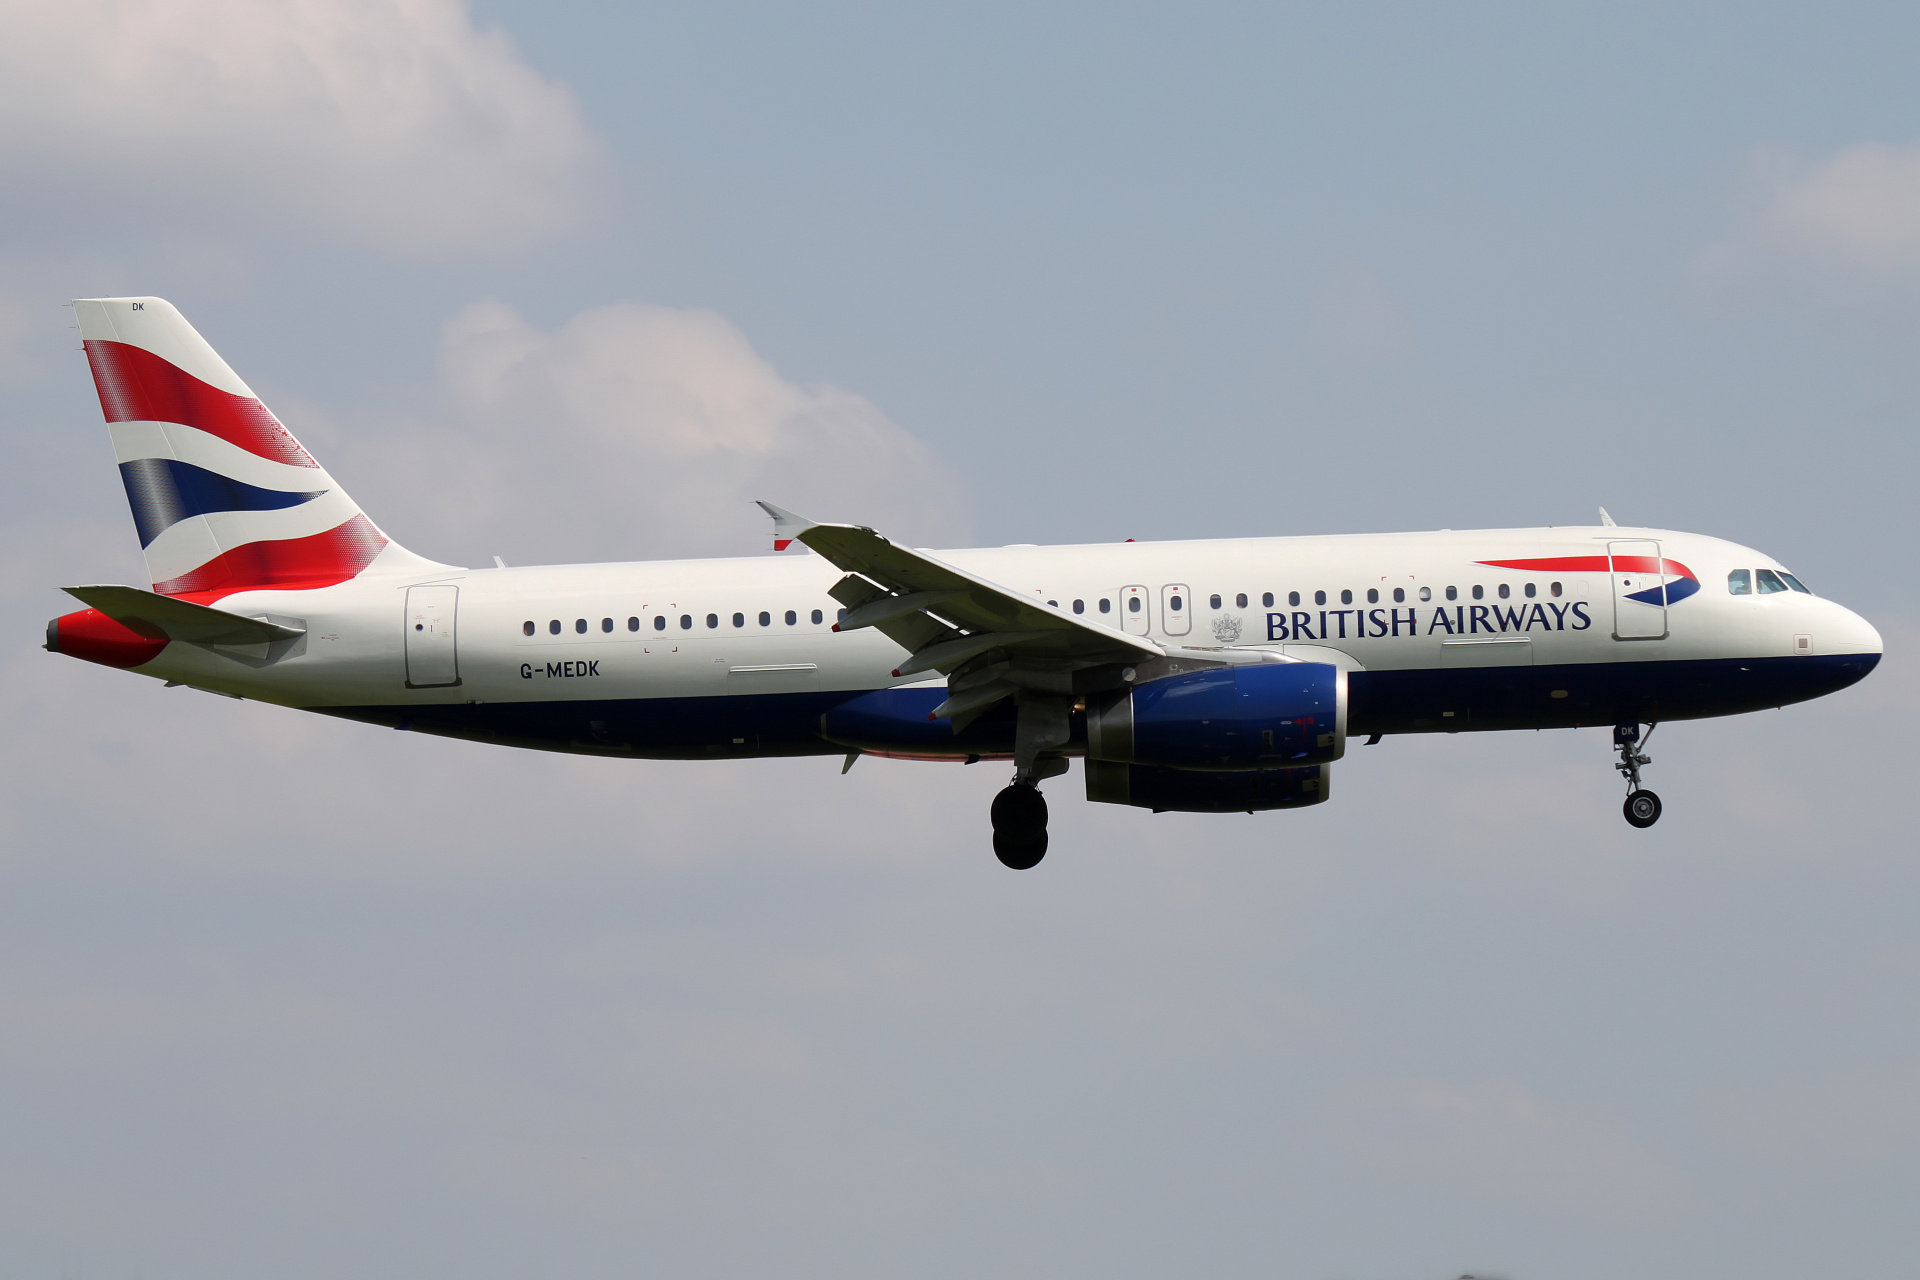 G-MEDK (Aircraft » EPWA Spotting » Airbus A320-200 » British Airways)